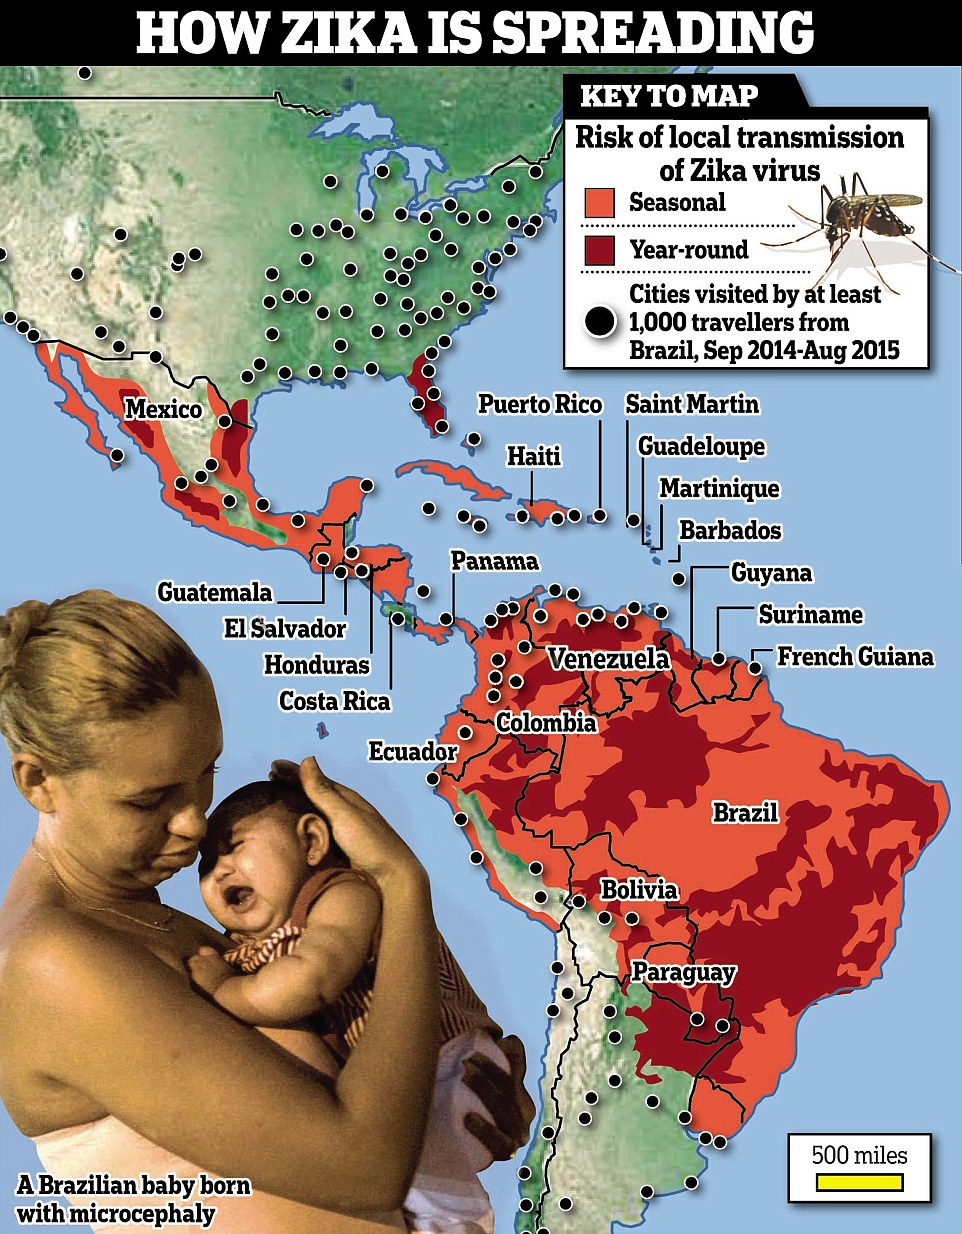 How Zika Virus Spreading